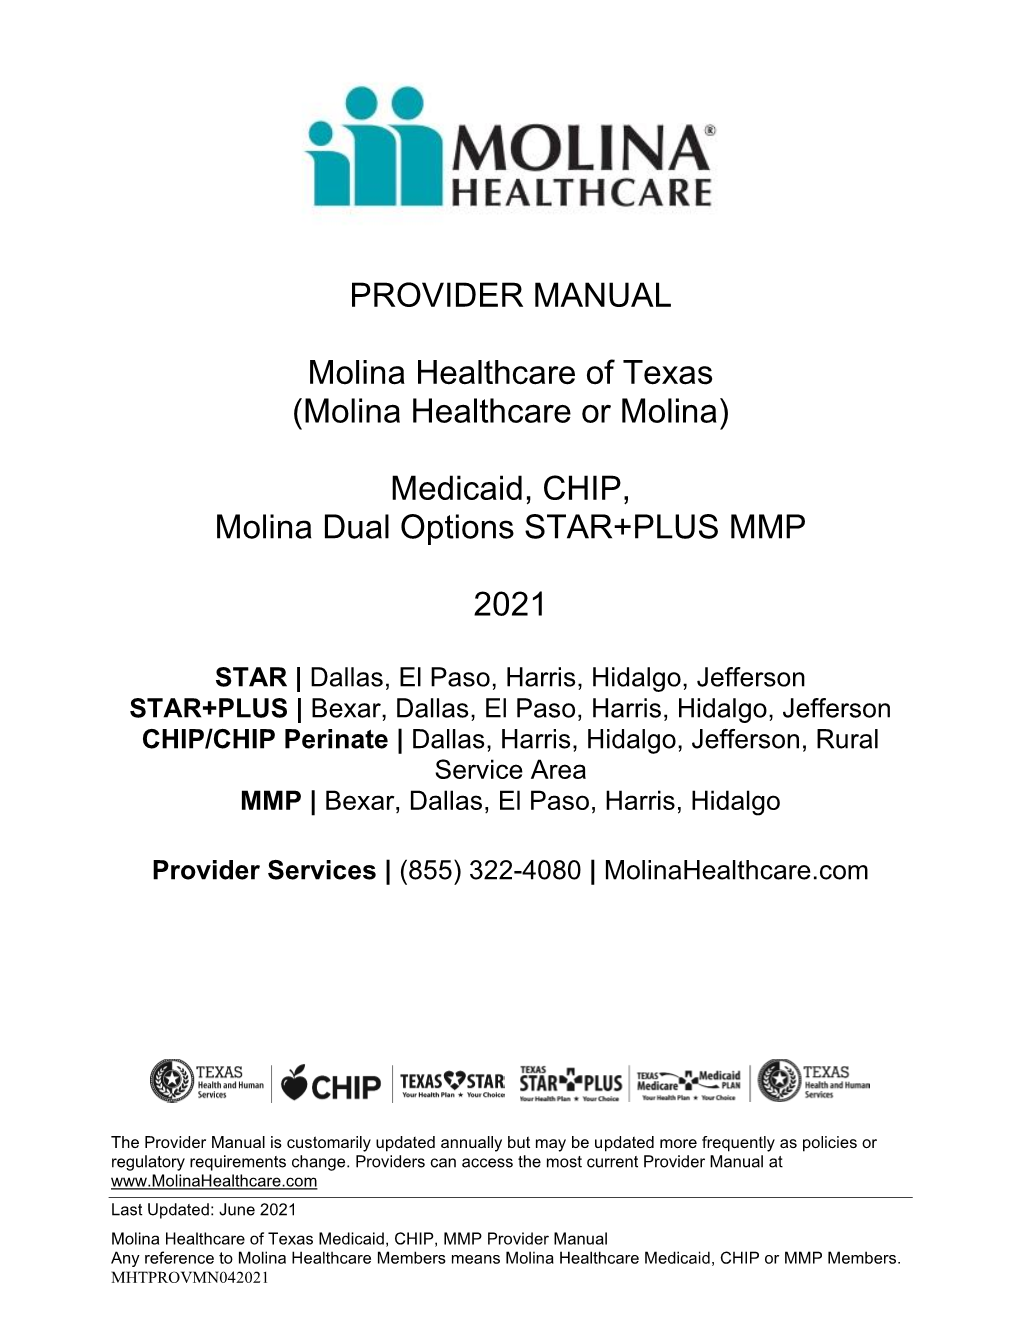 Medicaid, CHIP, Molina Dual Options STAR+PLUS MMP 2021